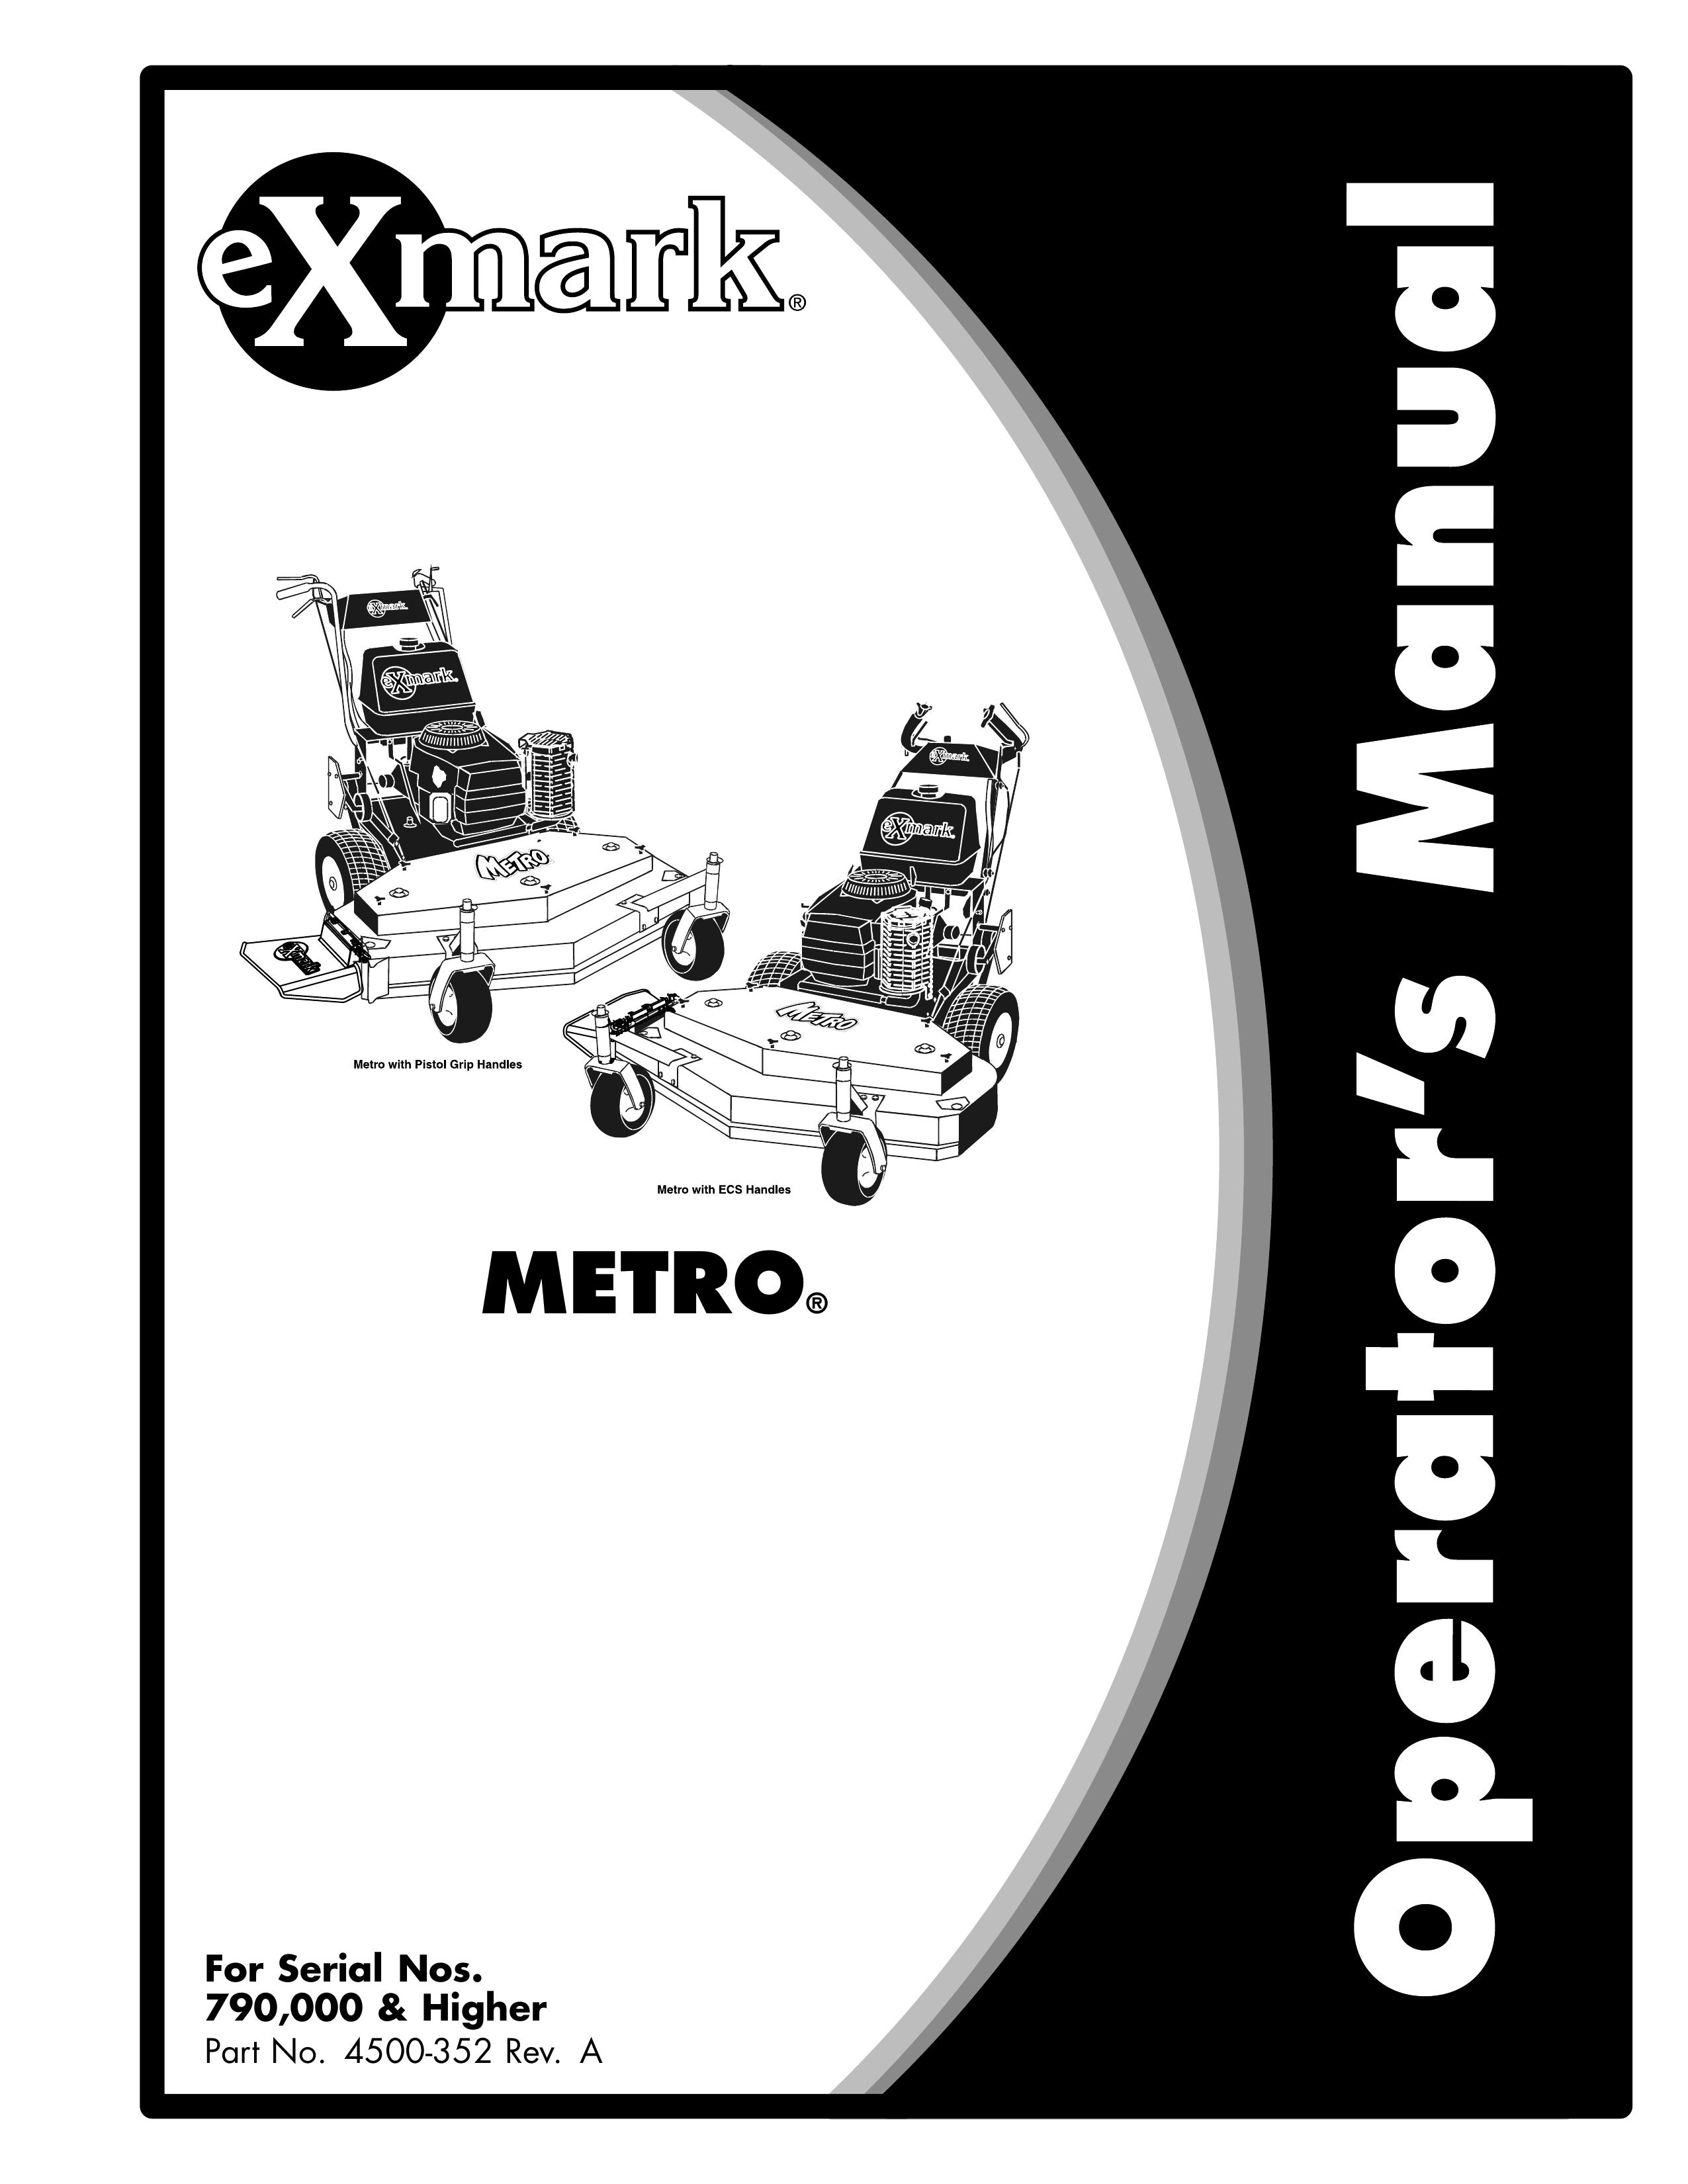 Exmark 4500-352 Lawn Mower User Manual